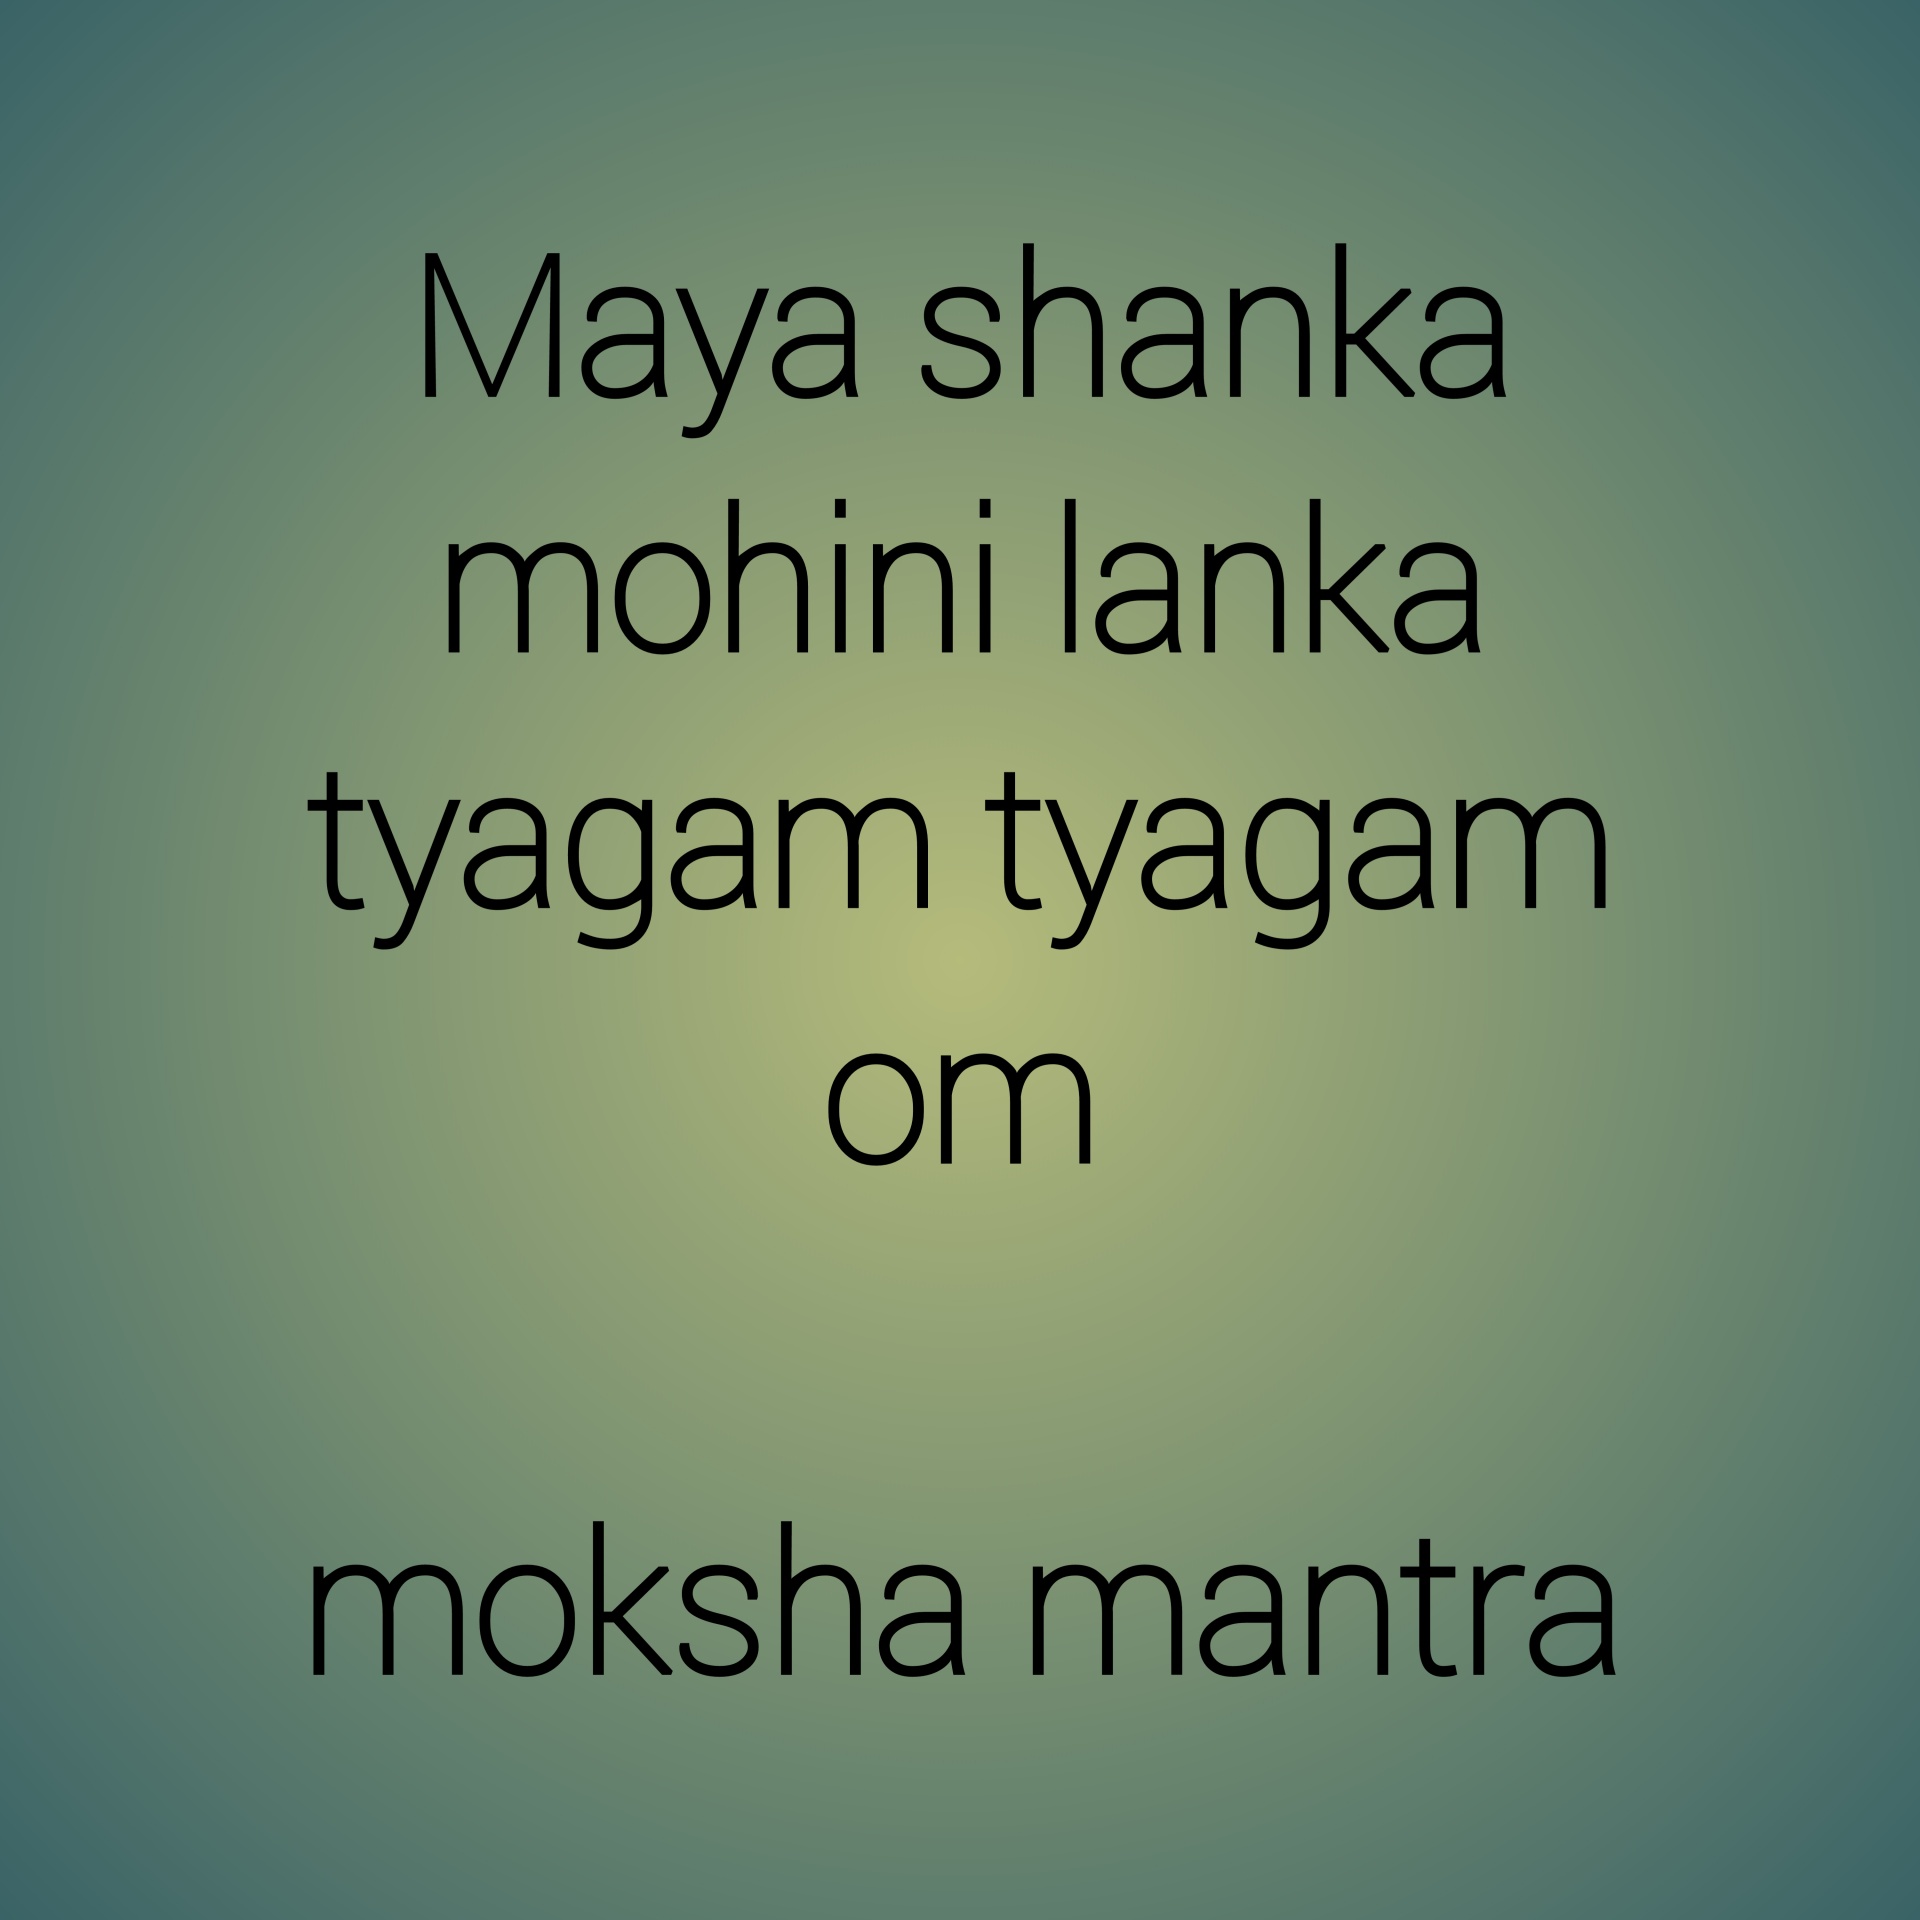 Maya shanka mantra